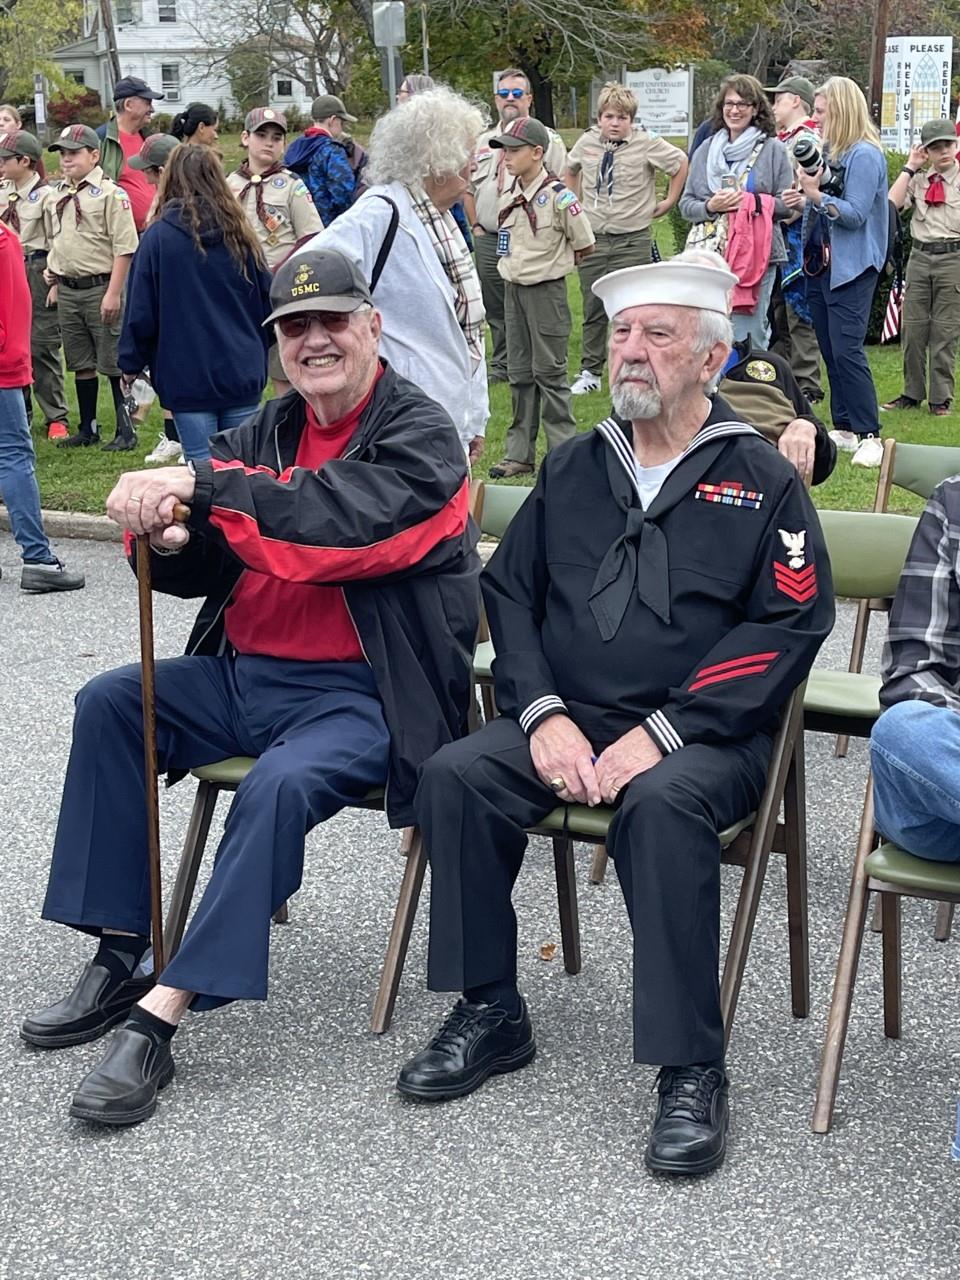 Two veterans